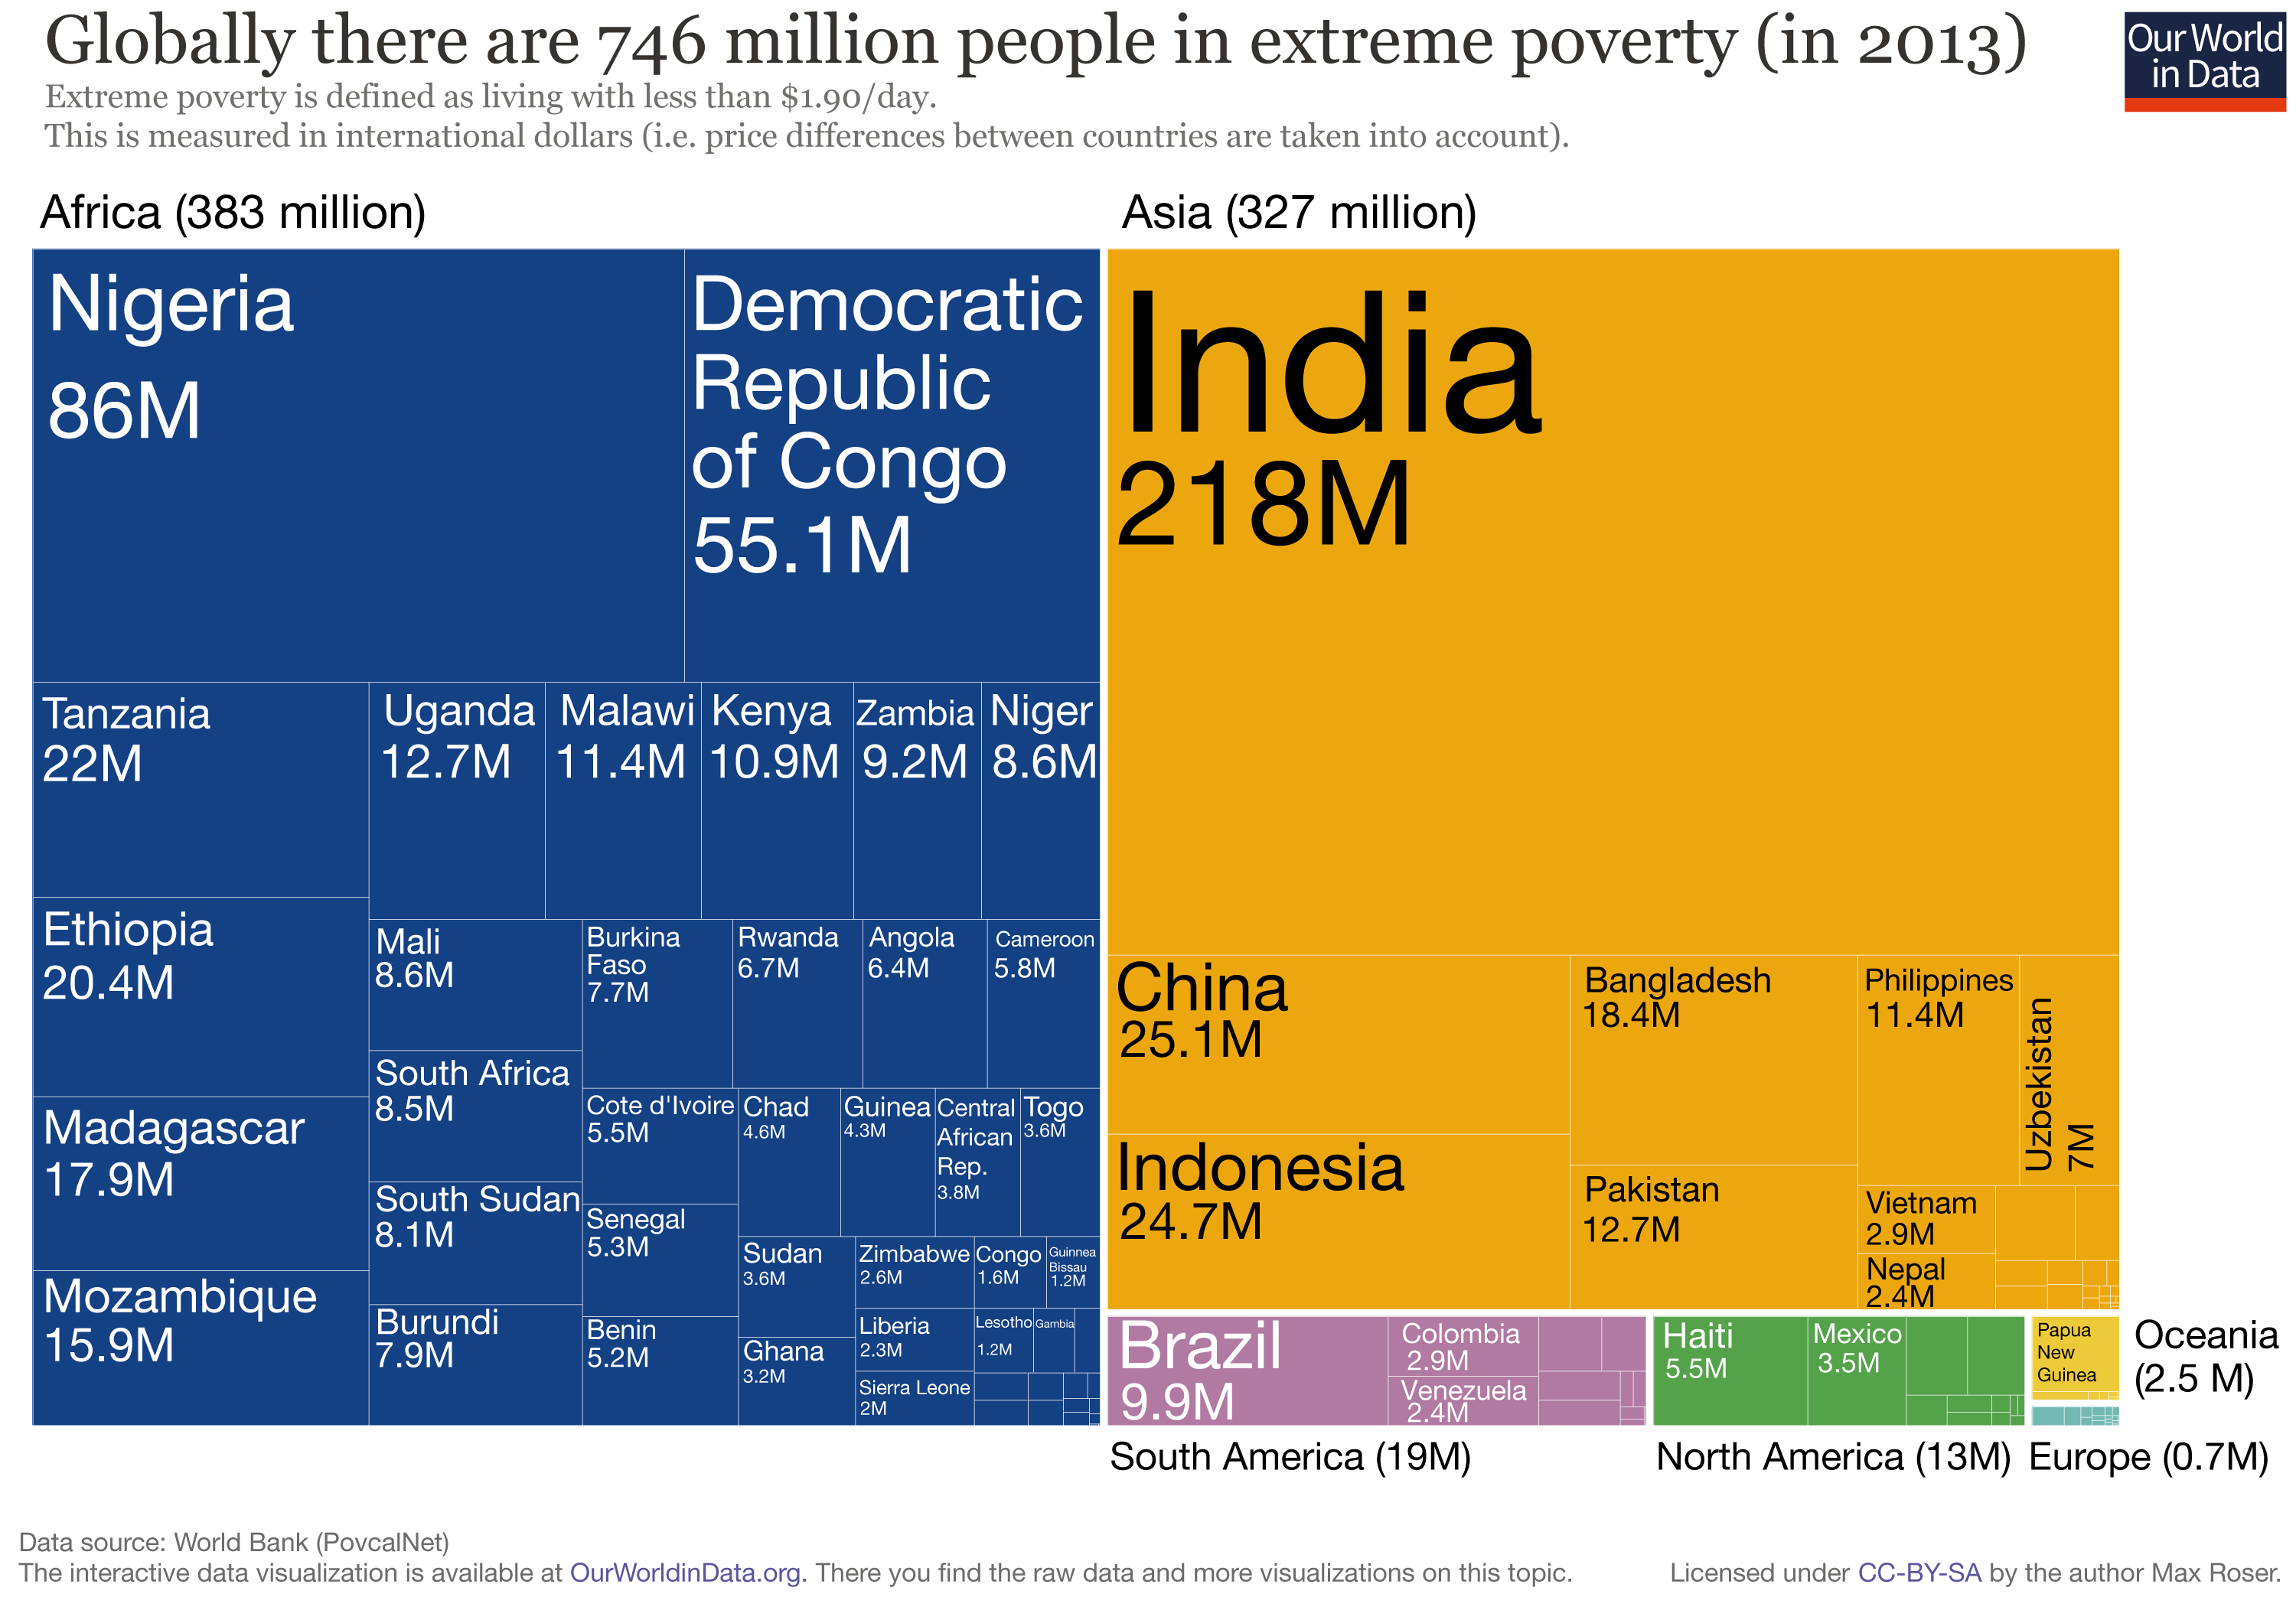 Asian poverty statistics